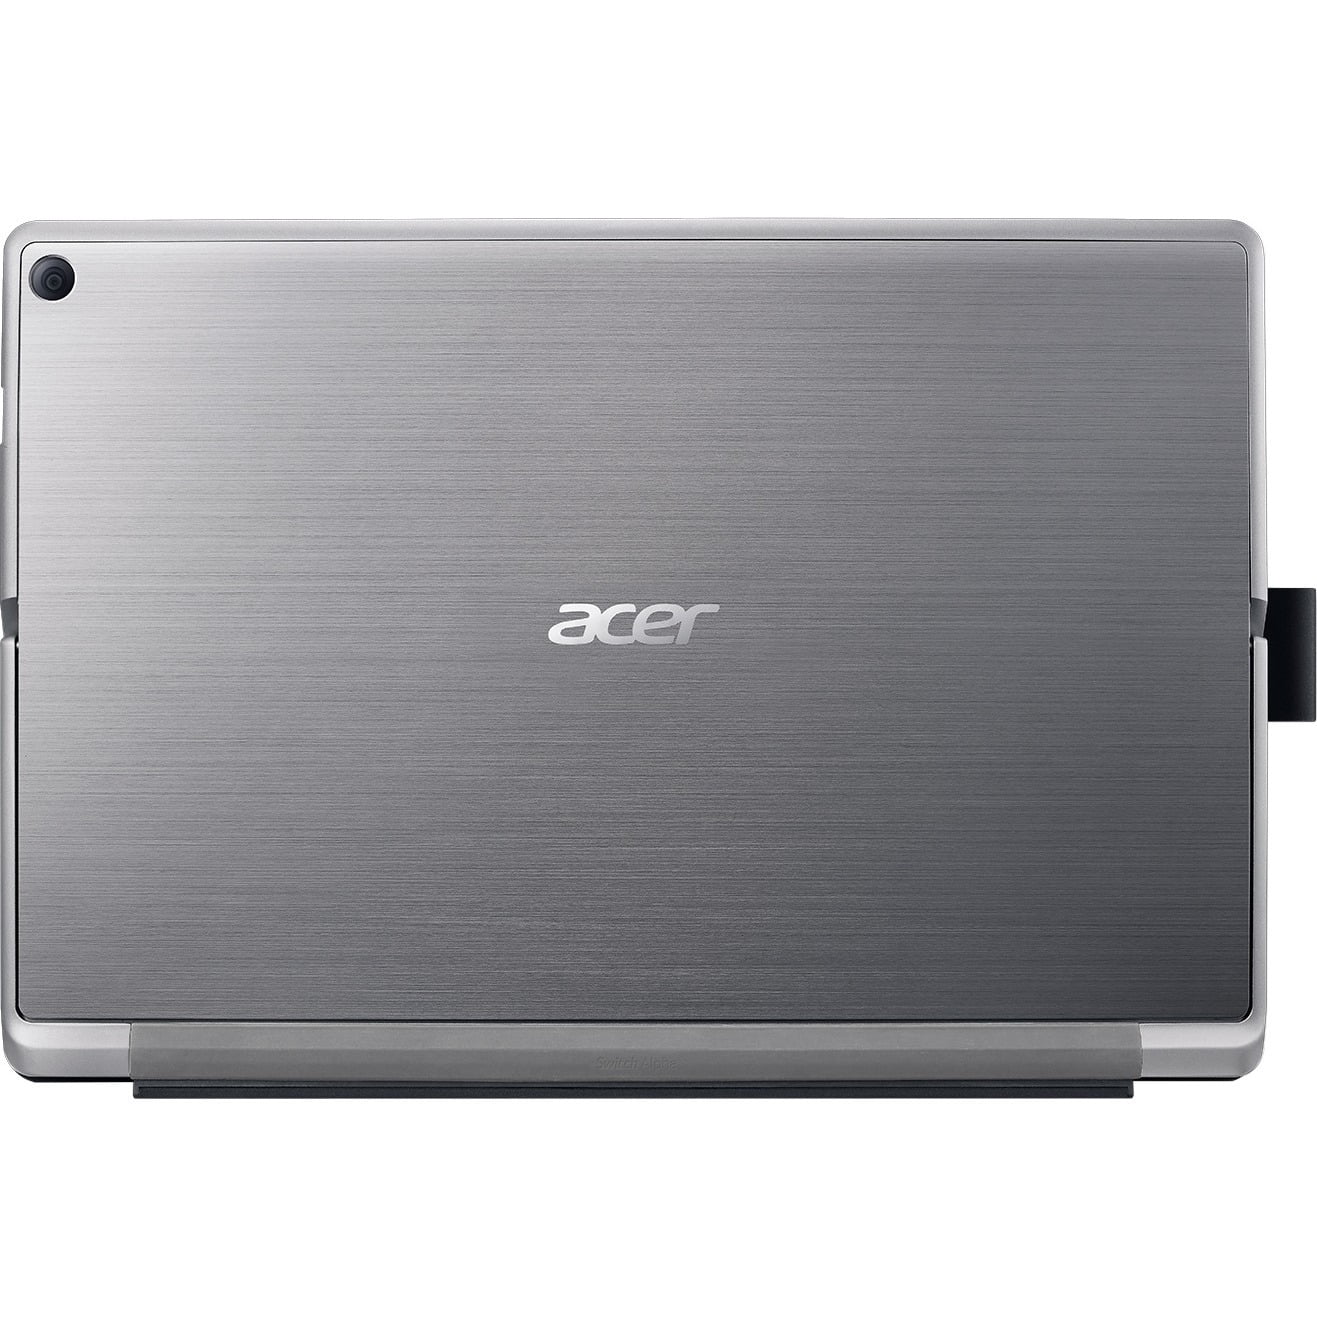 Acer Switch Alpha 12 Sa5 271 56fd 12 Core I5 60u 4 Gb Ram 128 Gb Ssd Us International Walmart Com Walmart Com